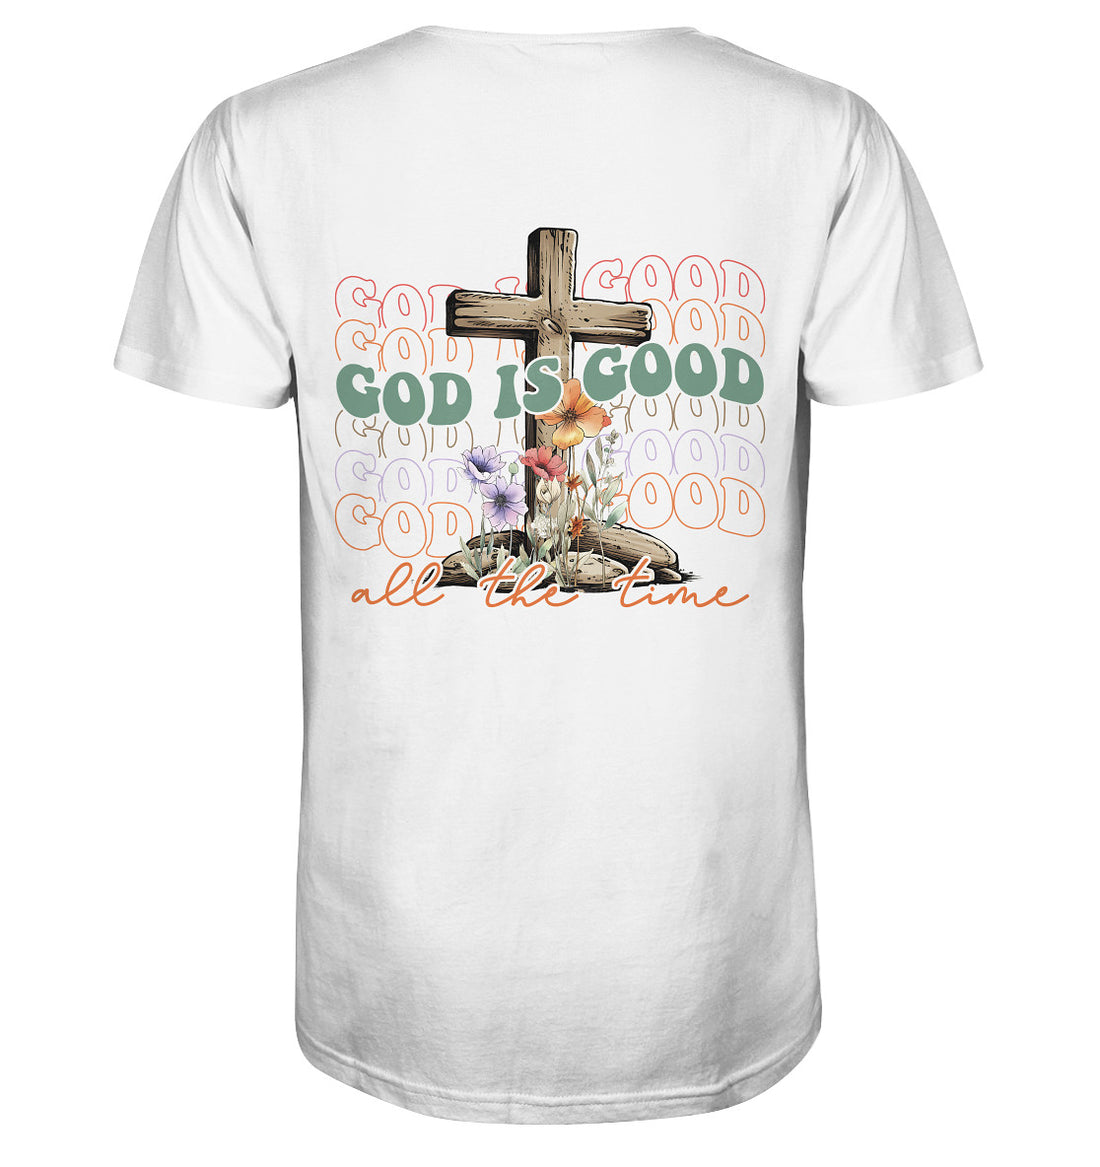 GOD IS GOOD - Organic Shirt